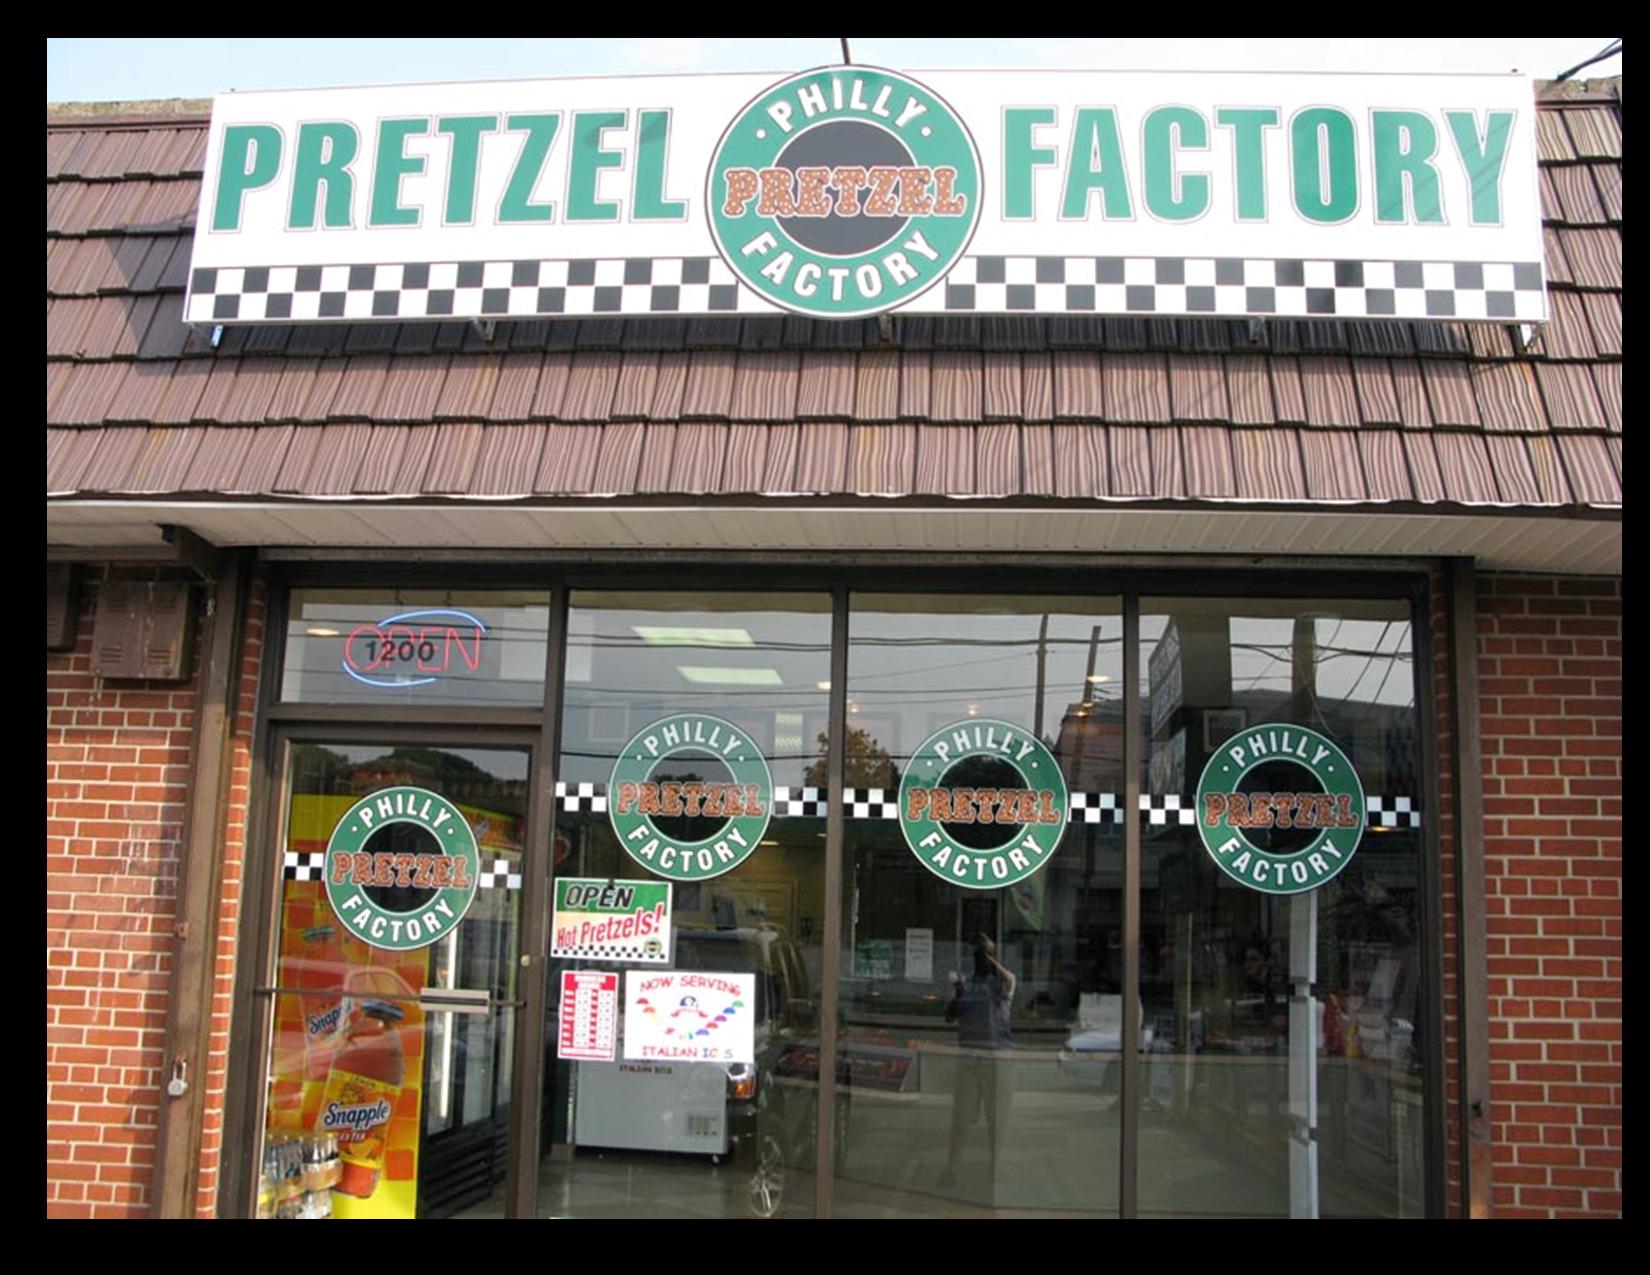 philly pretzel factory